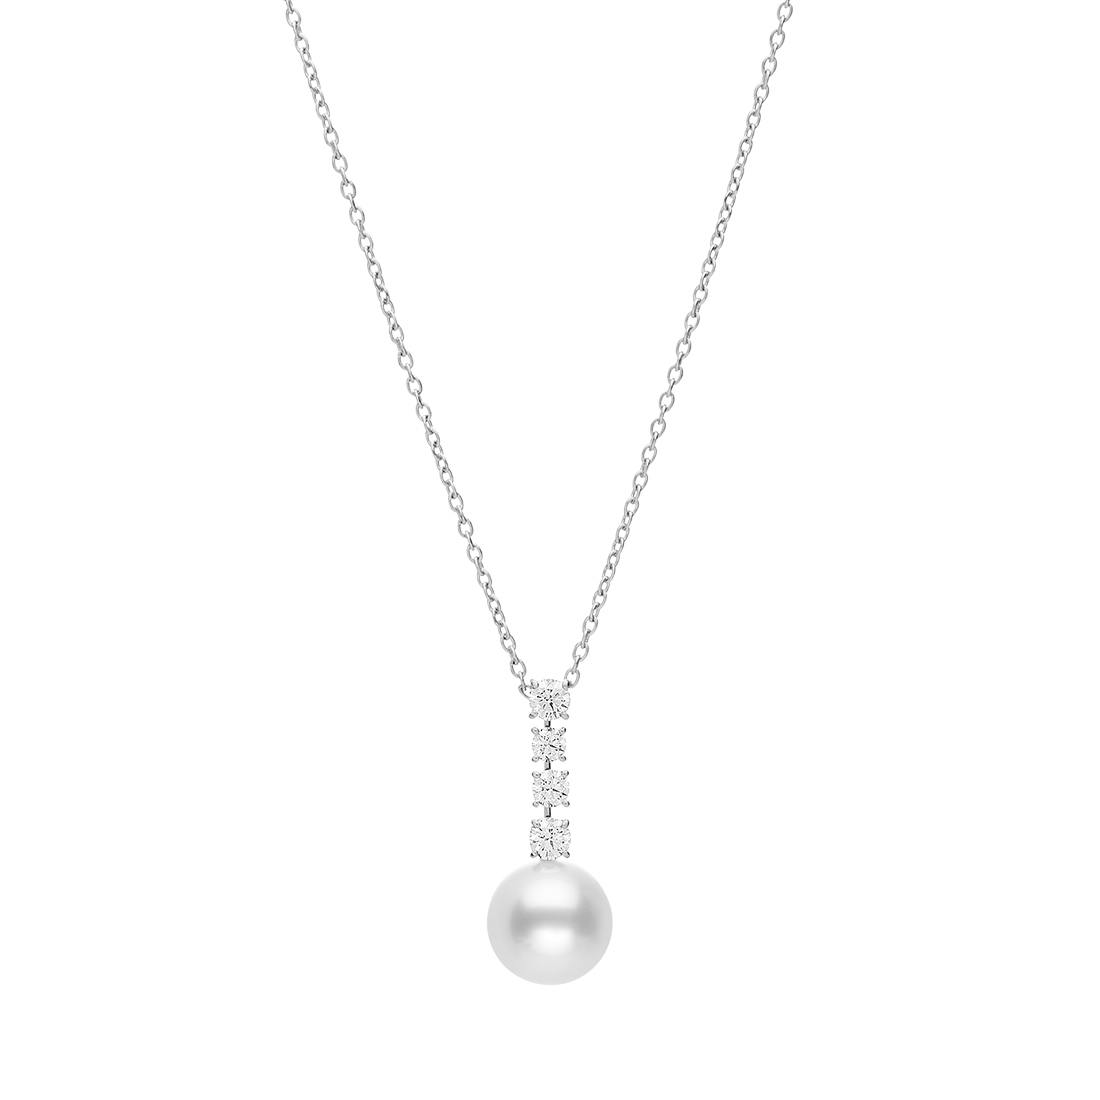 Mikimoto 12mm "A+" White South Sea Pearl and Diamond Drop Pendant Necklace